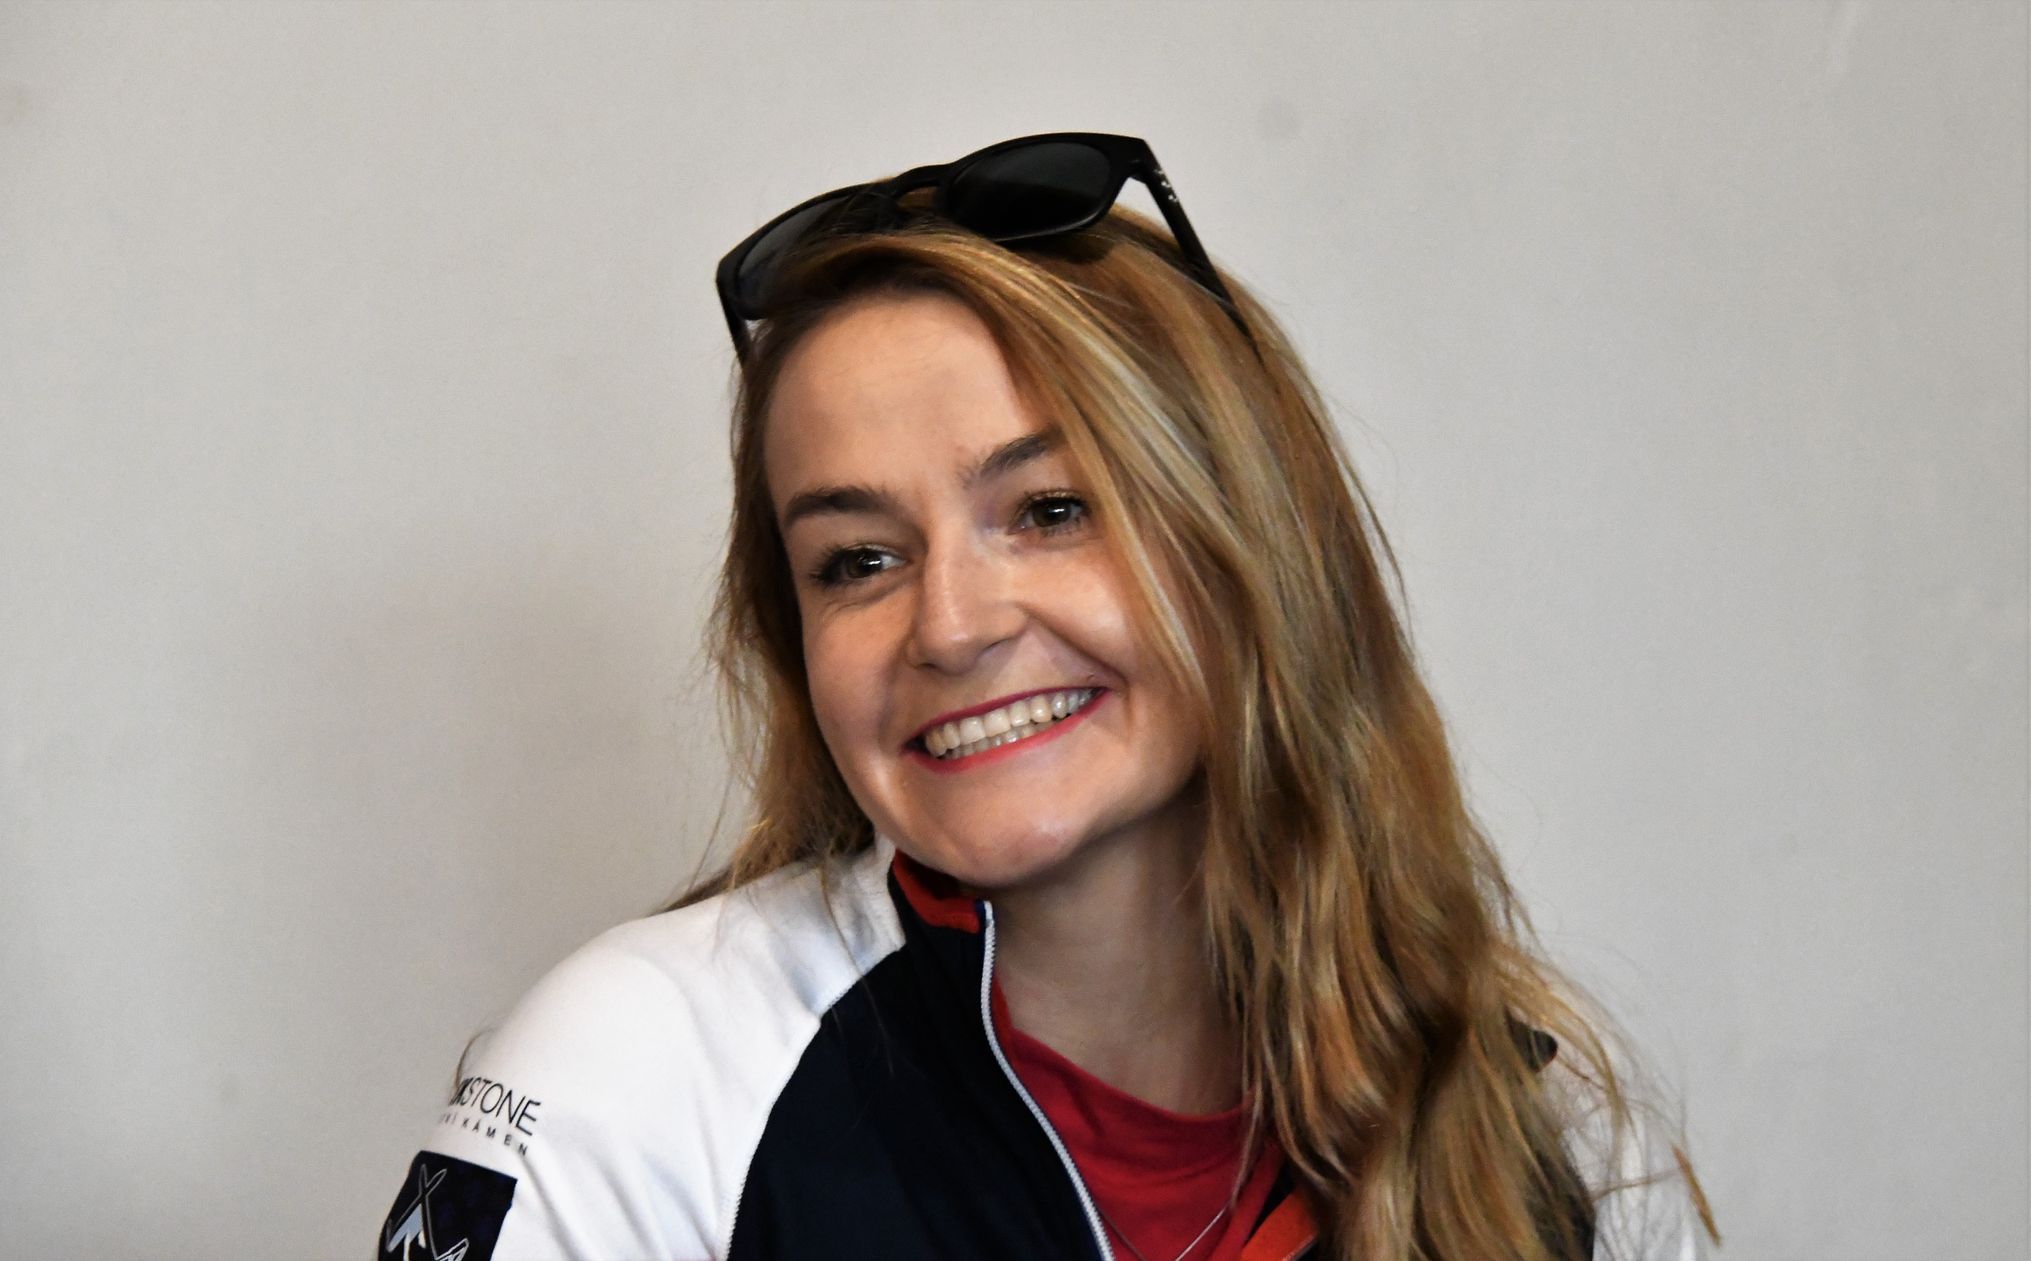 Skikrosařka Kučerová schied bei Olympia im Achtelfinale aus, Näslundová gewann Gold